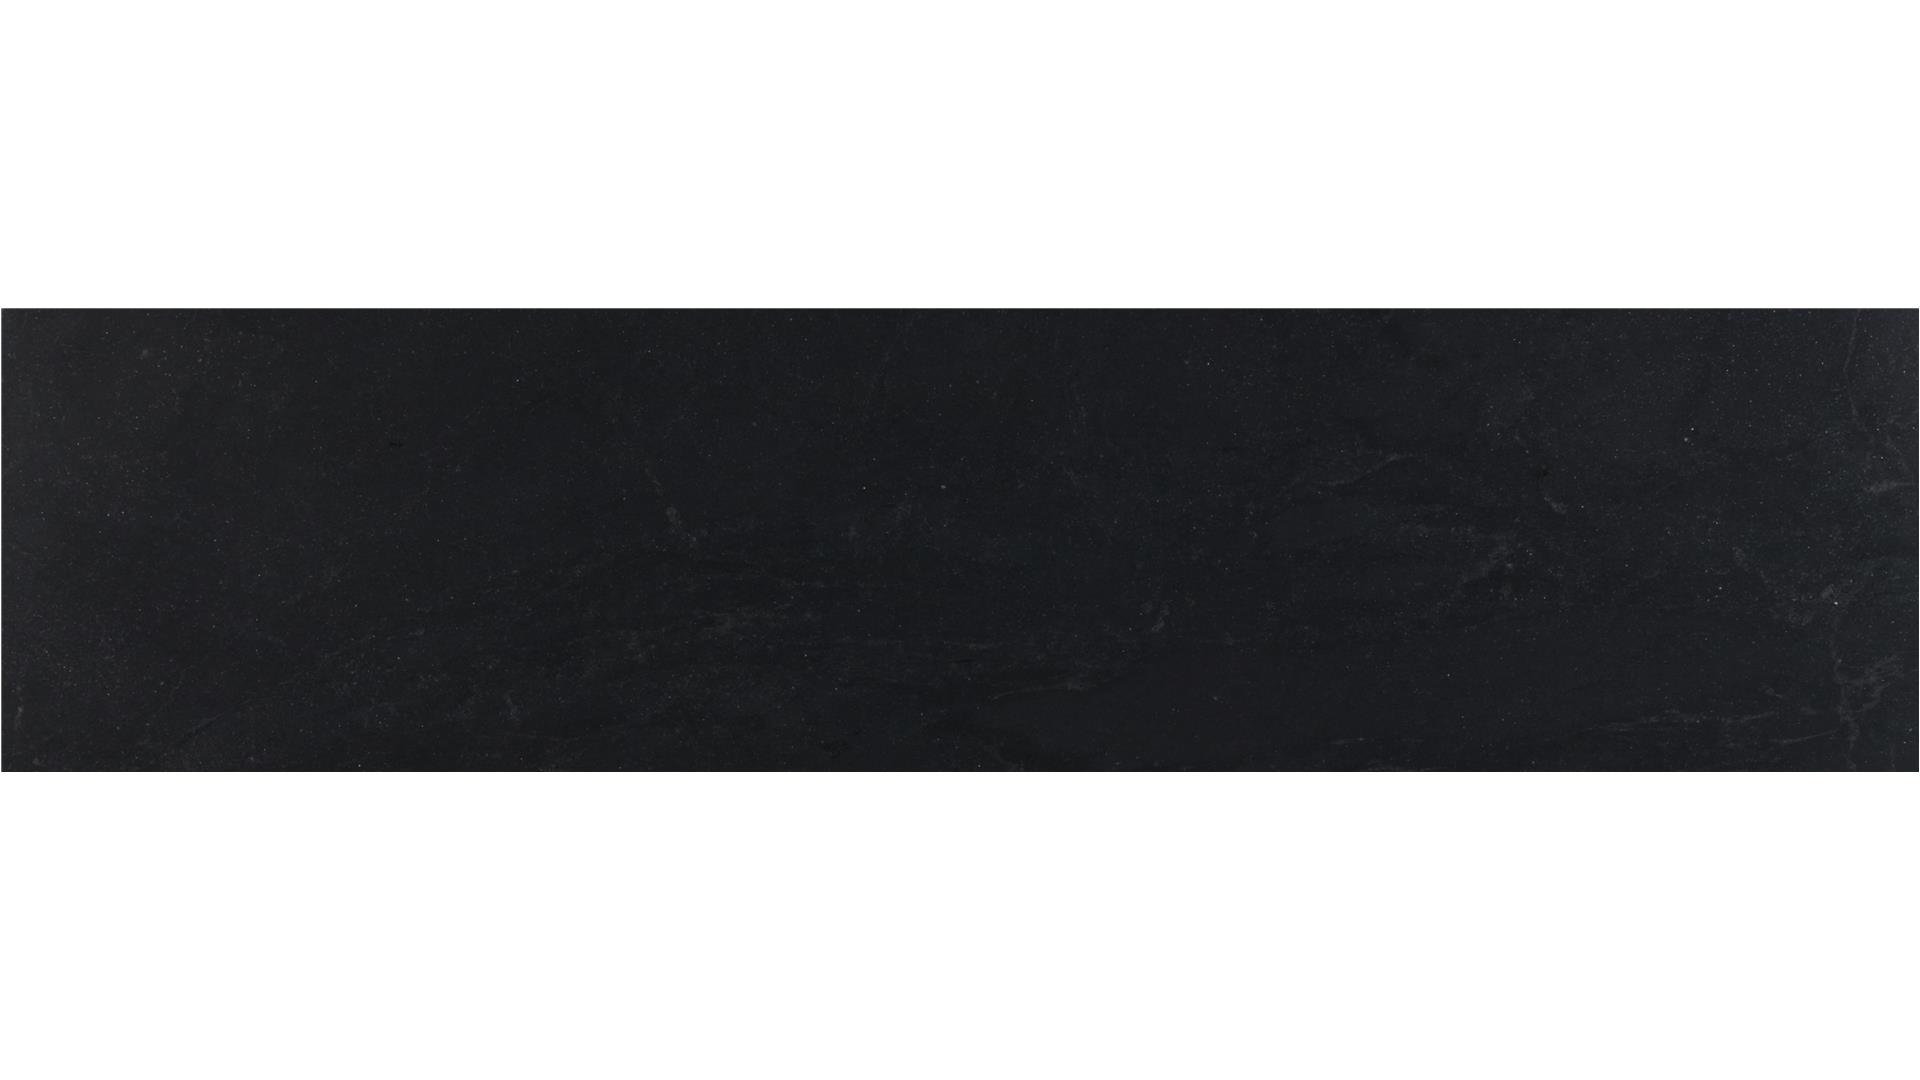 Ebony / Negresco (Honed) Granite Slabs